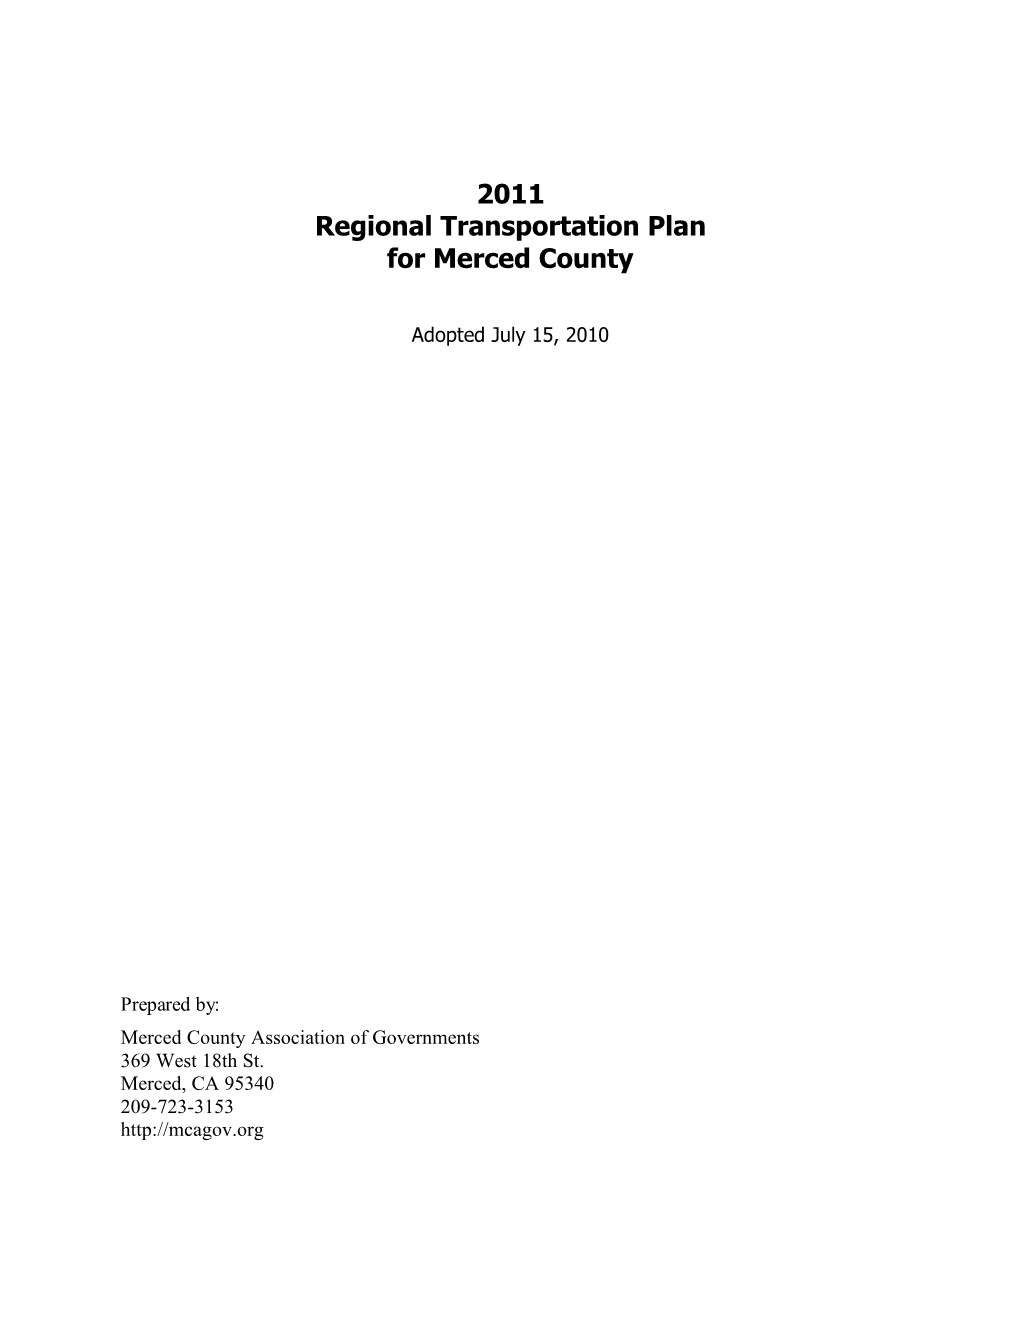 2011 Regional Transportation Plan for Merced County